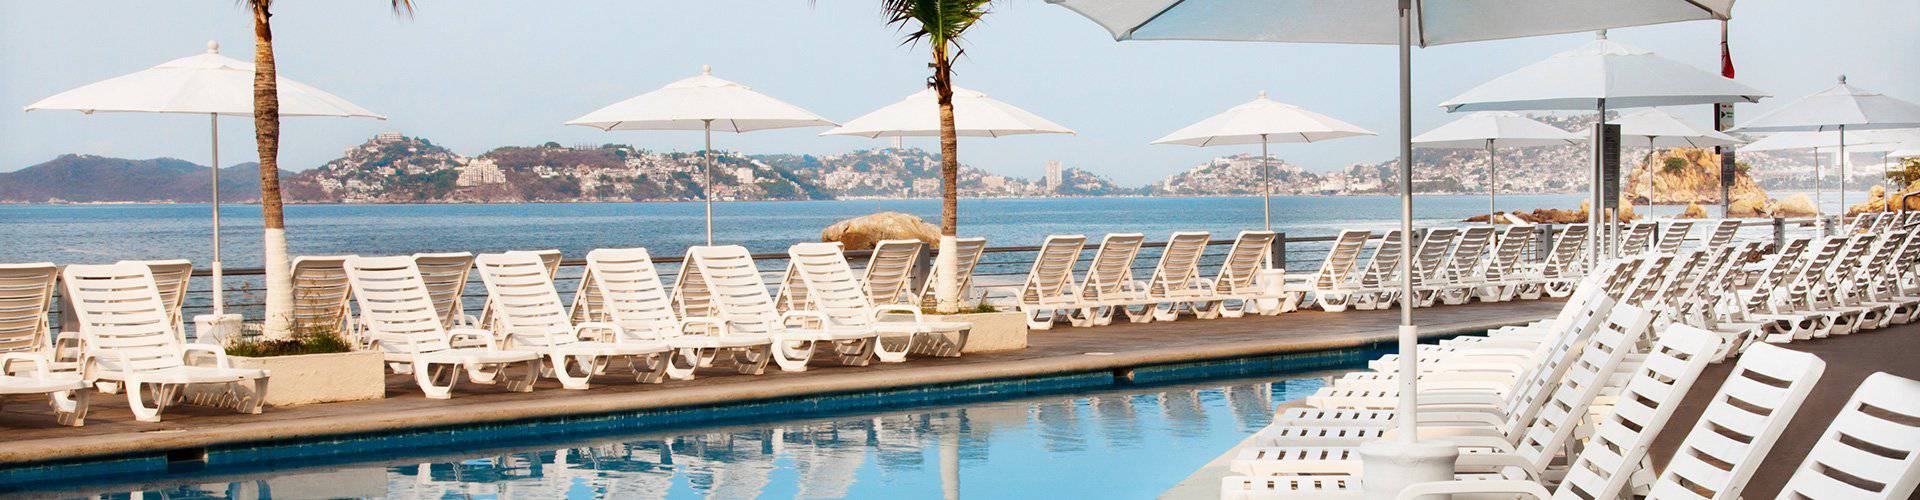 Ostar Grupo Hotelero - Acapulco - 